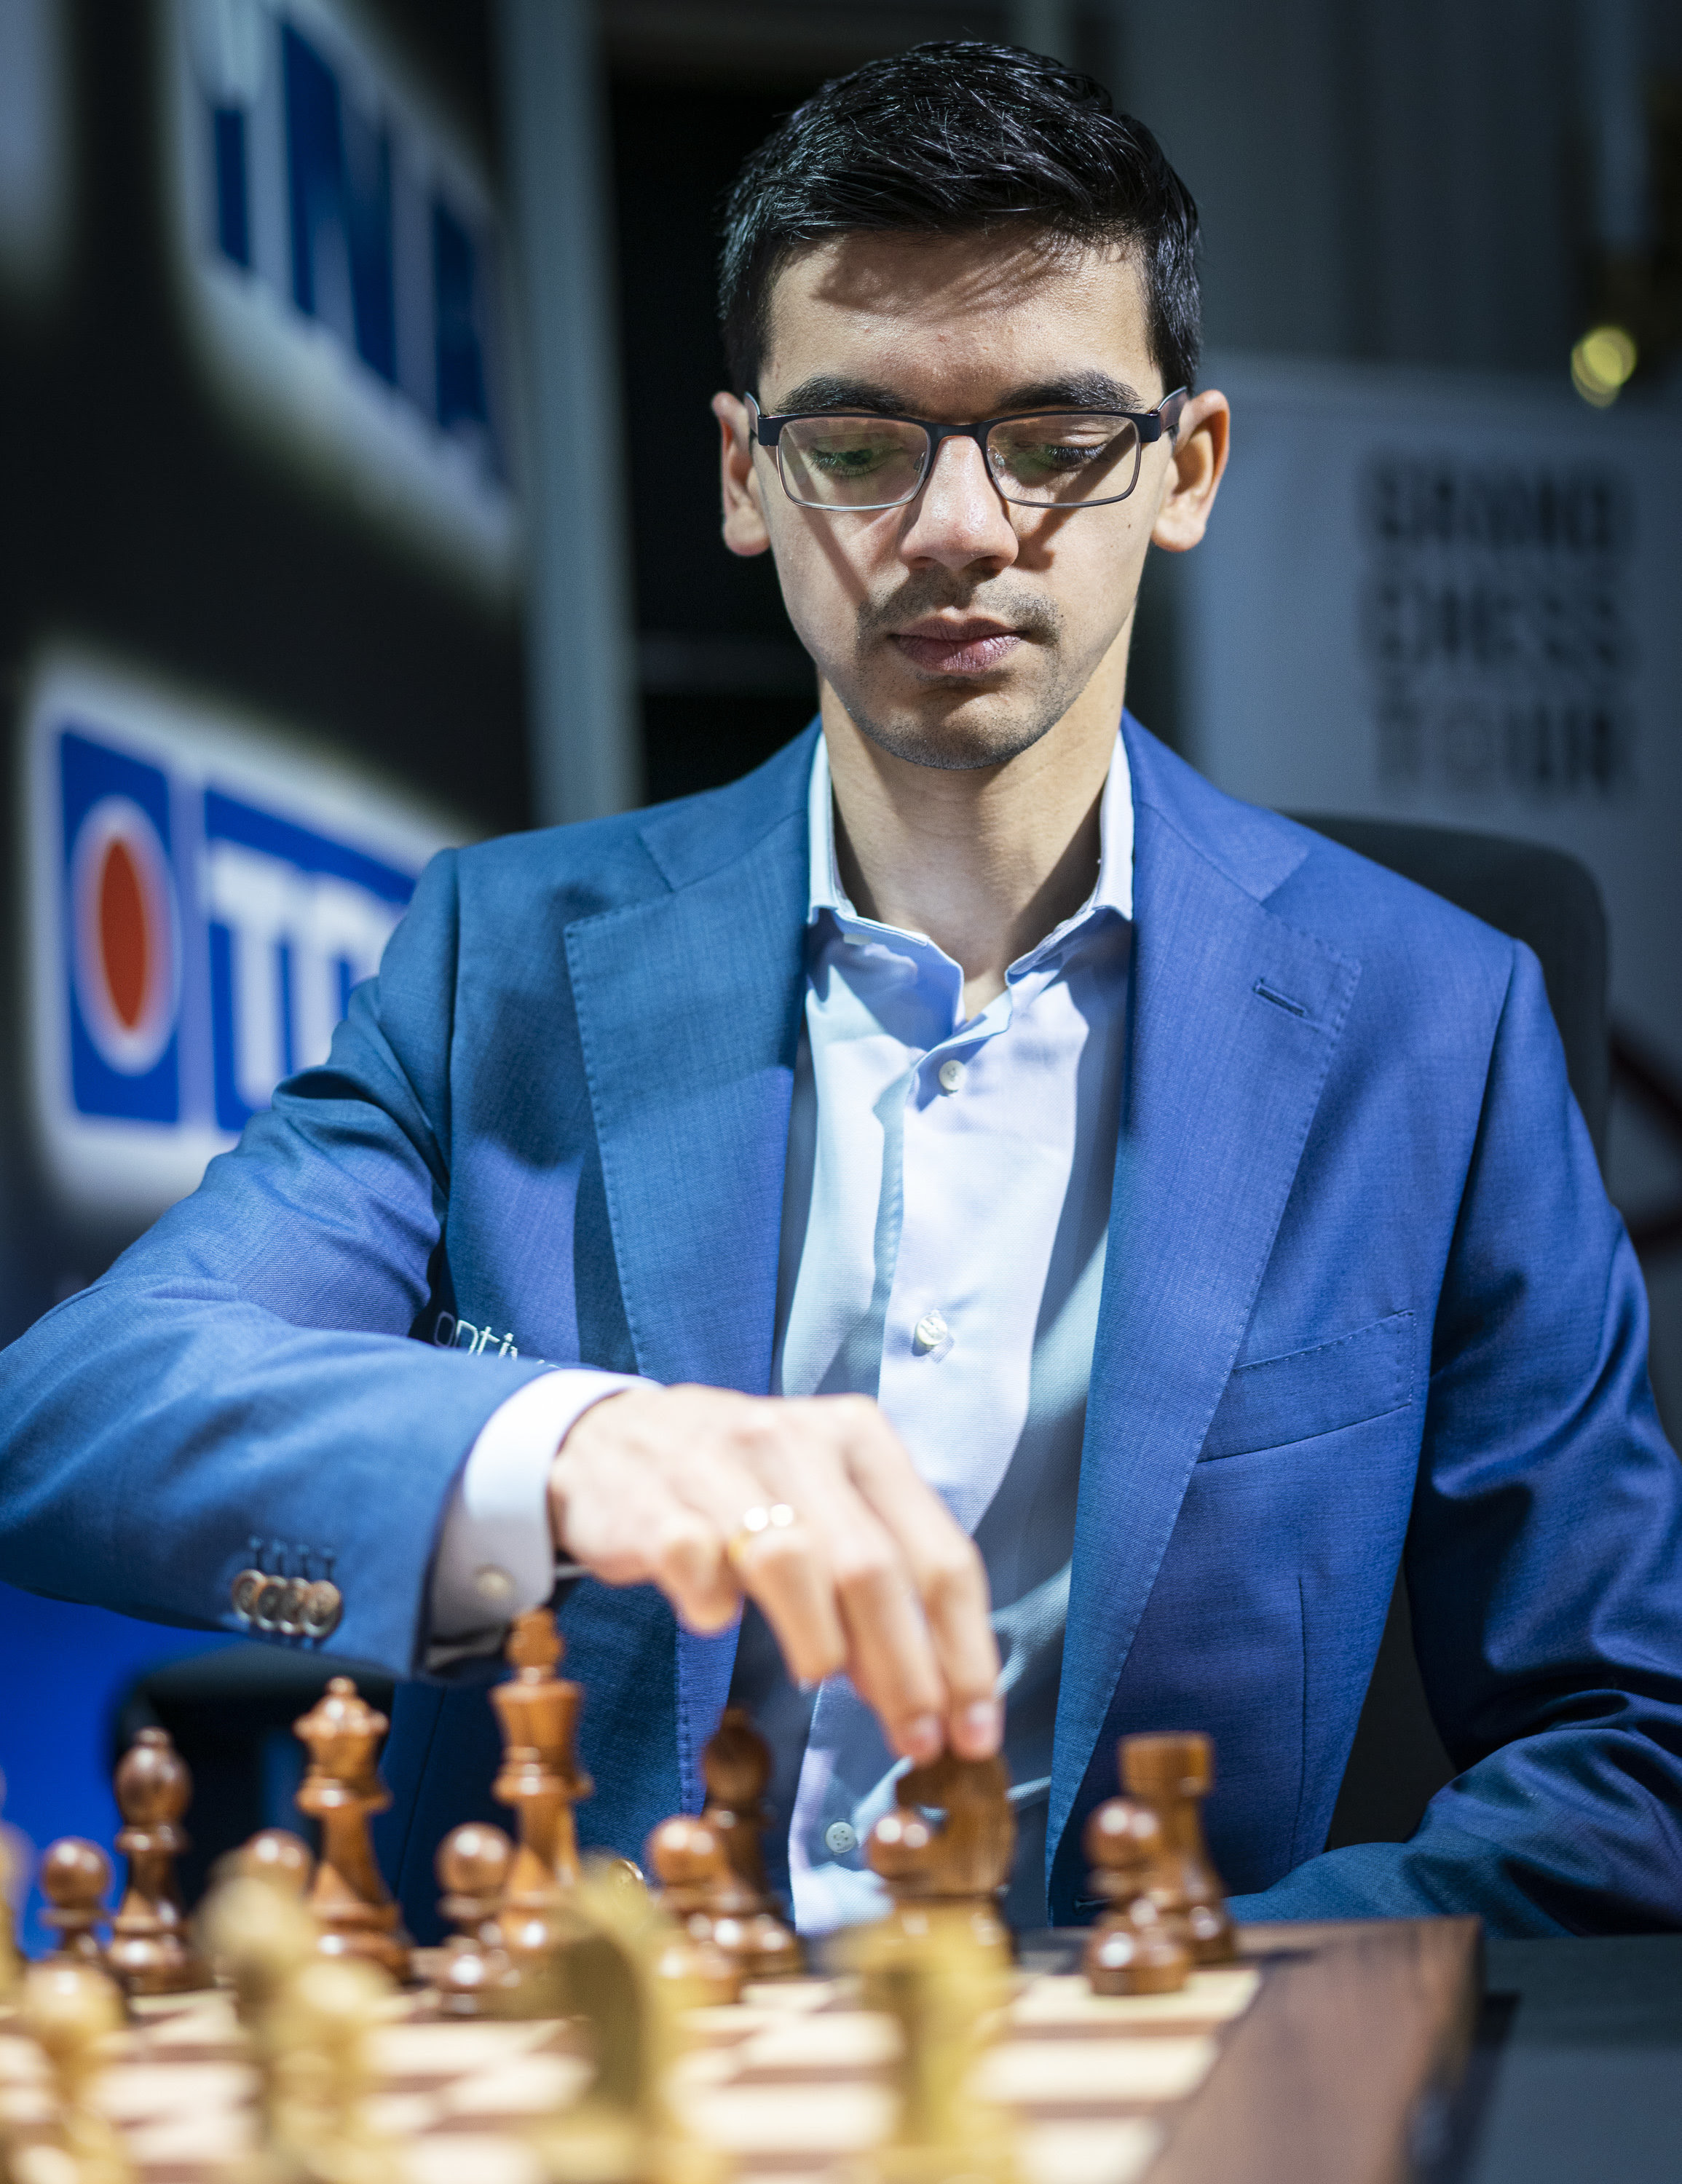 ChessBomb Blog: 2019 Croatia Grand Chess Tour – Recap Round 3